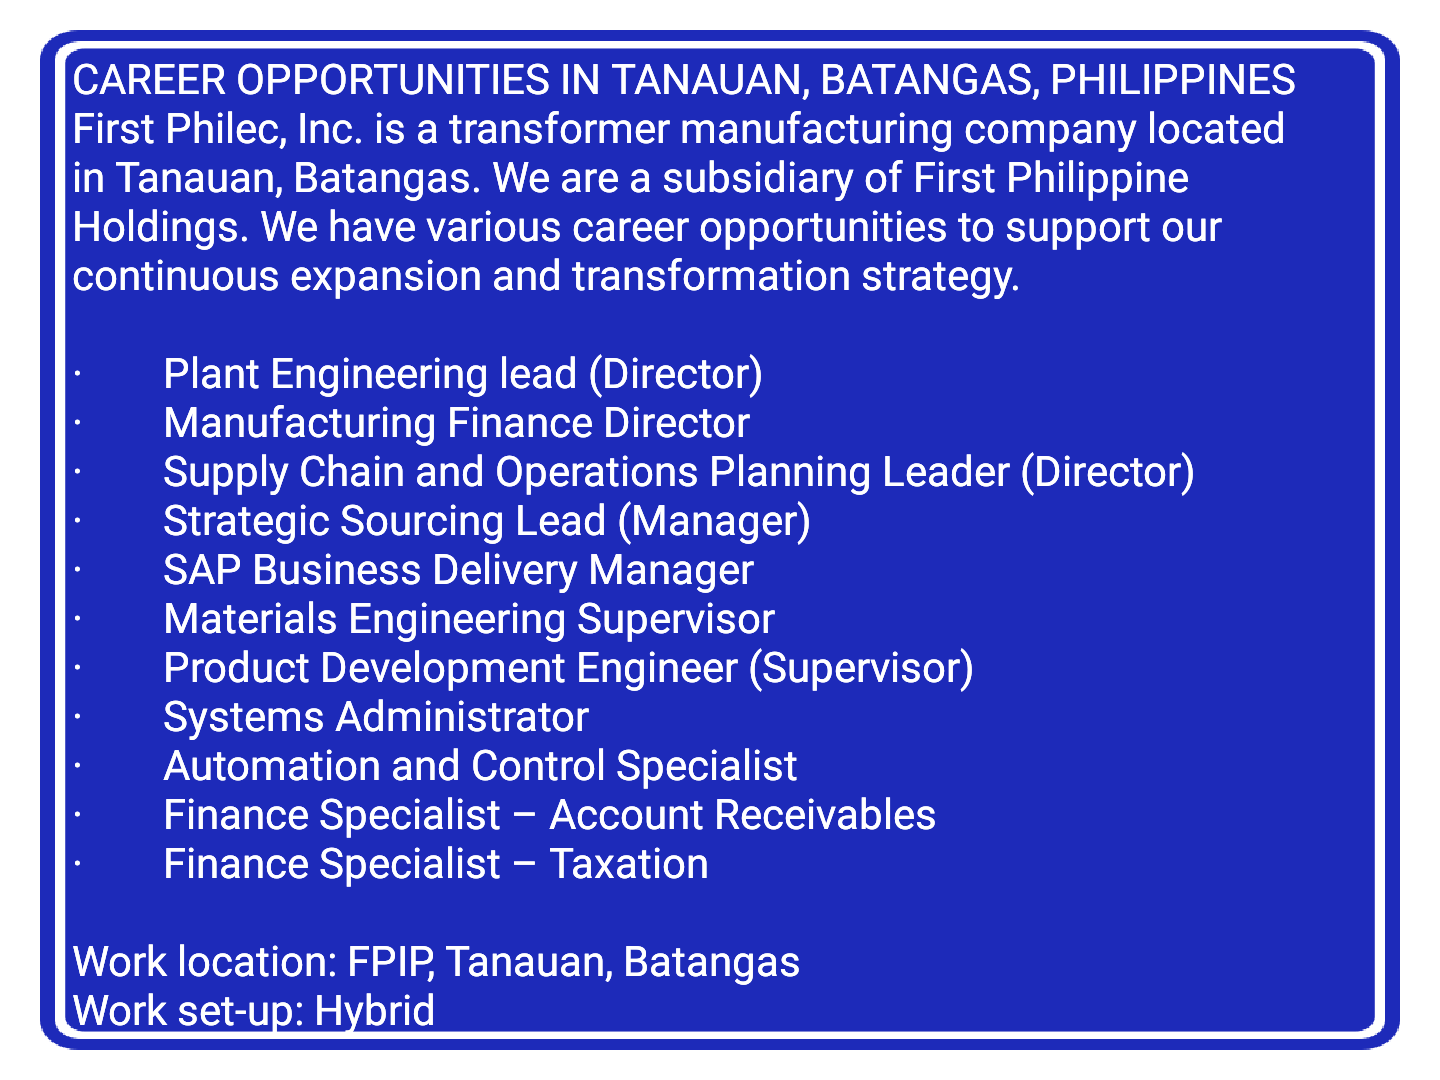 Philipines Job Openings